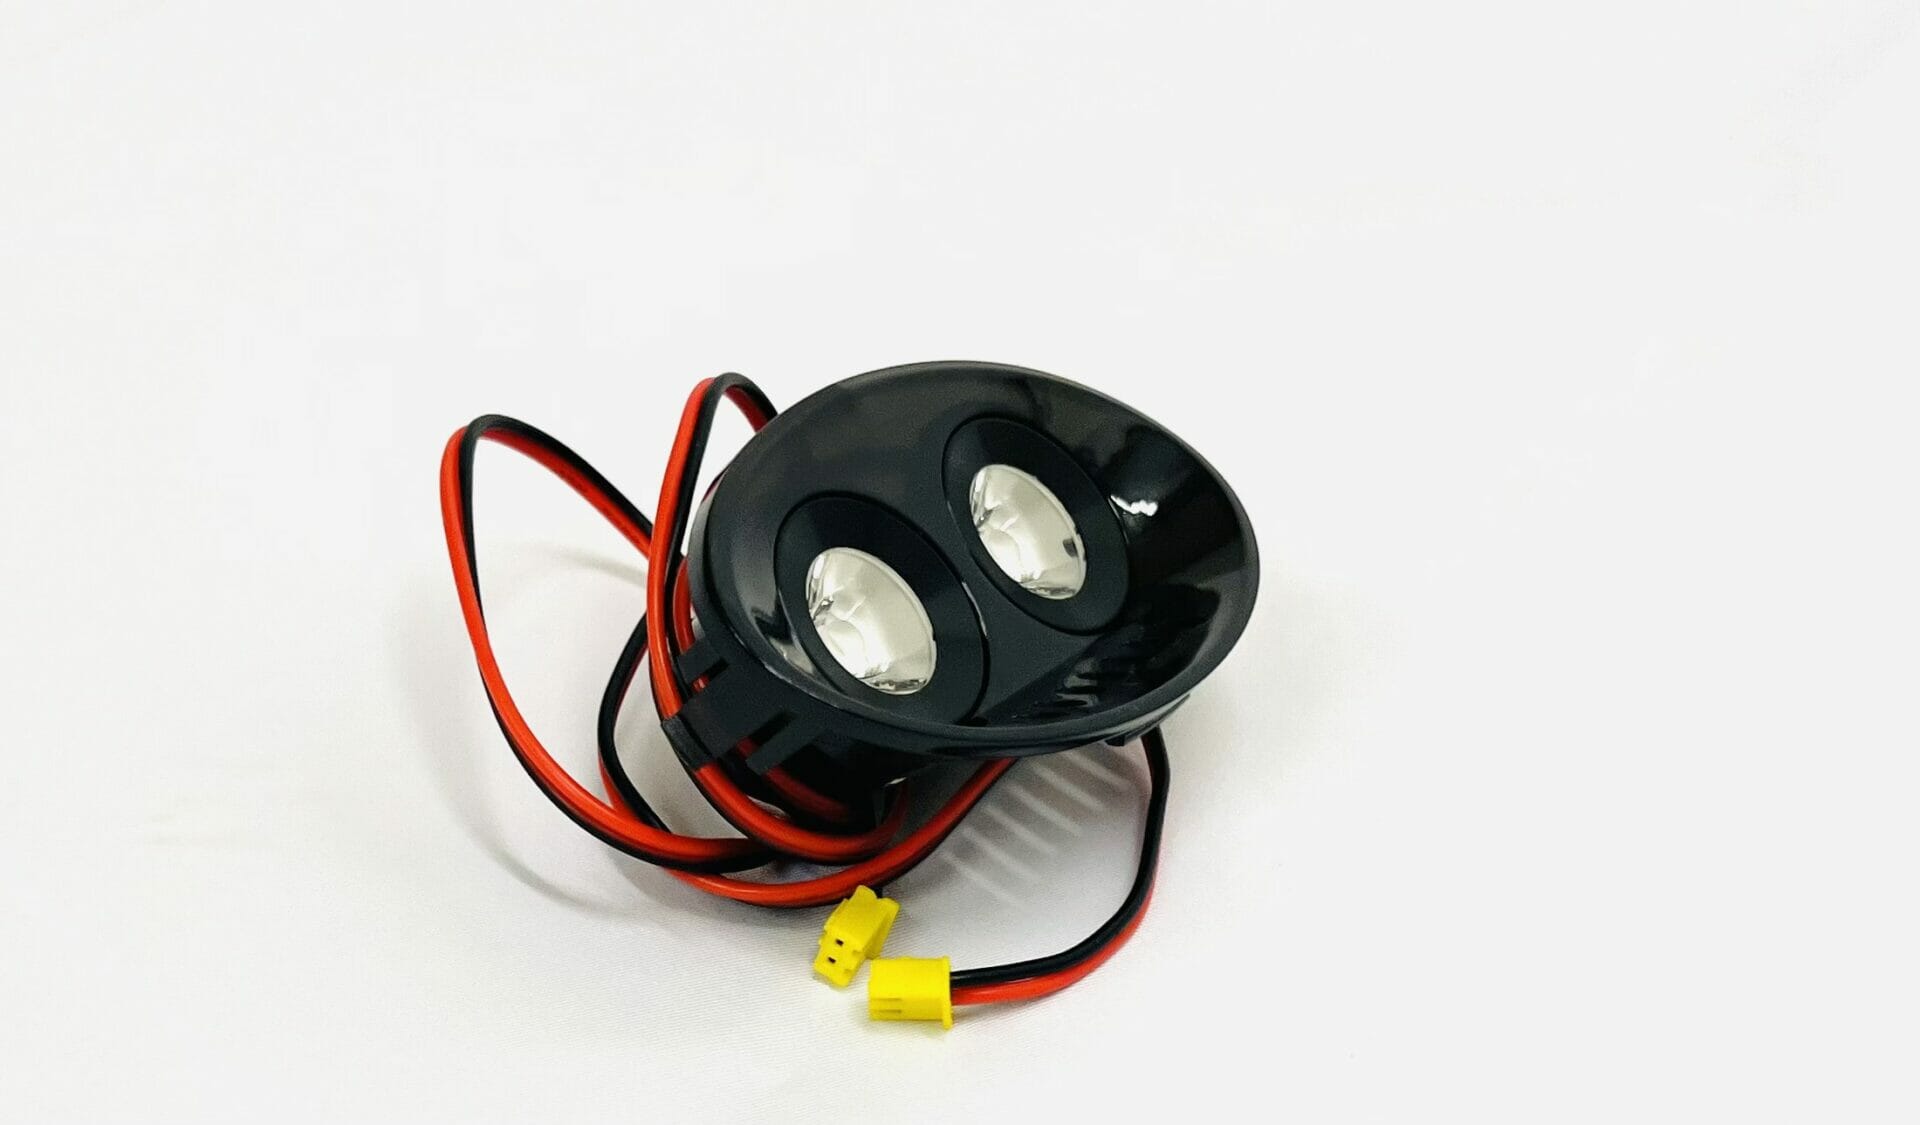 Begode (Gotway) RS19 Electric Unicycle Headlight